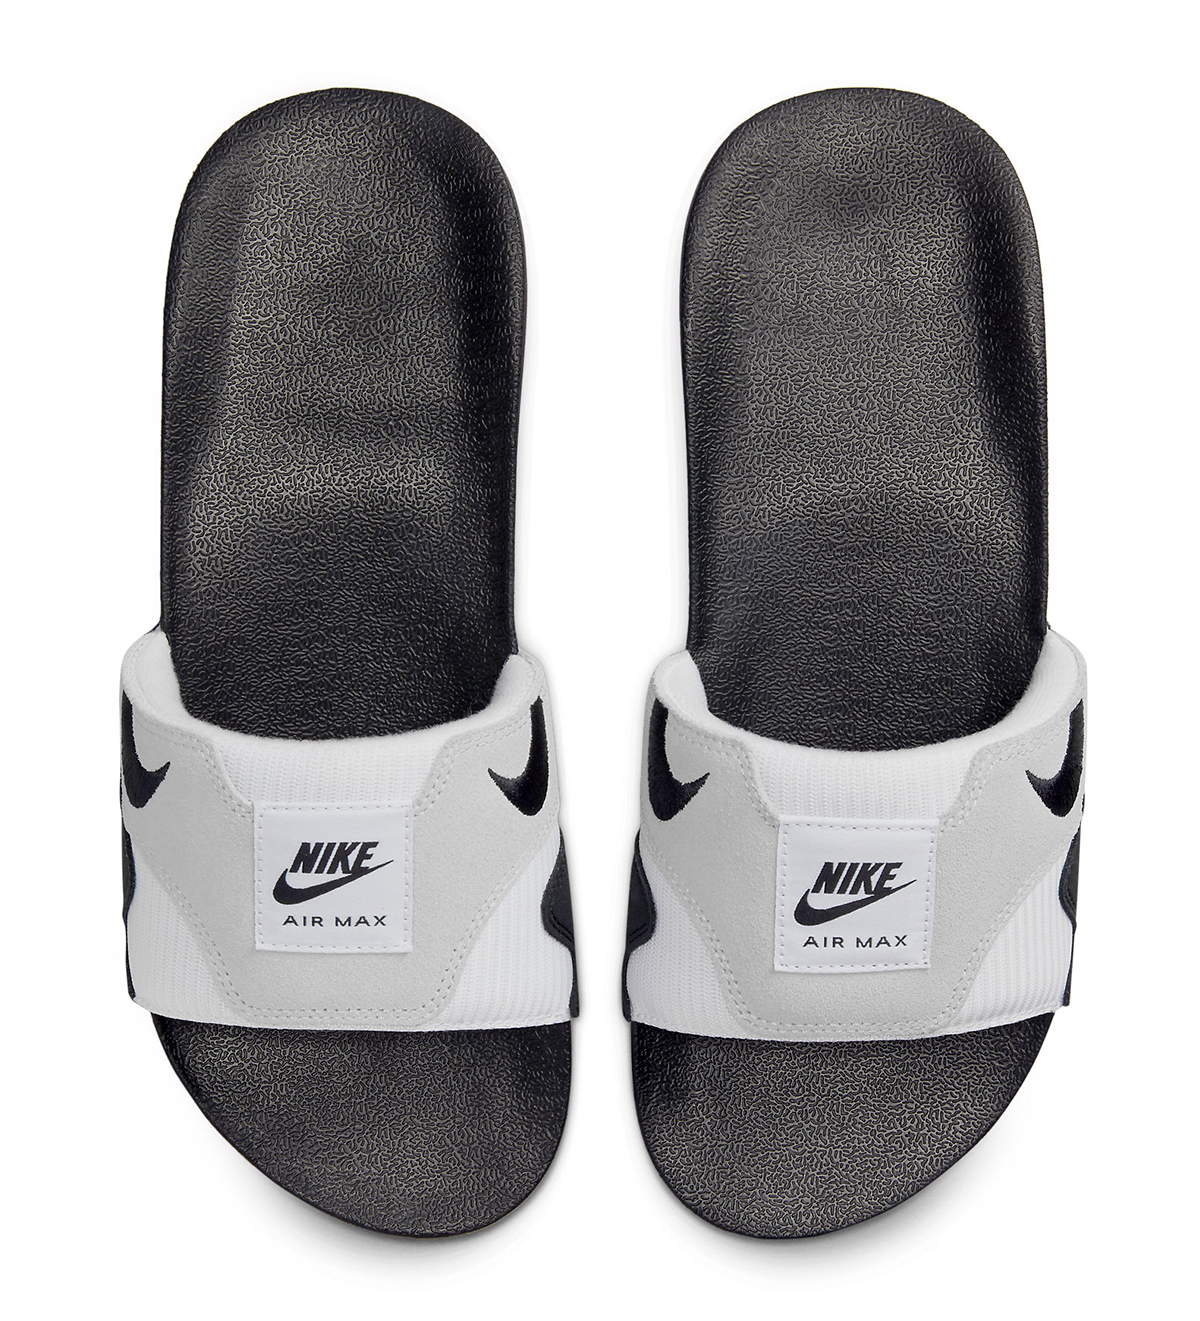 Nike Air Max 1 Slide 'Black/White' bovenaanzicht witte achtergrond